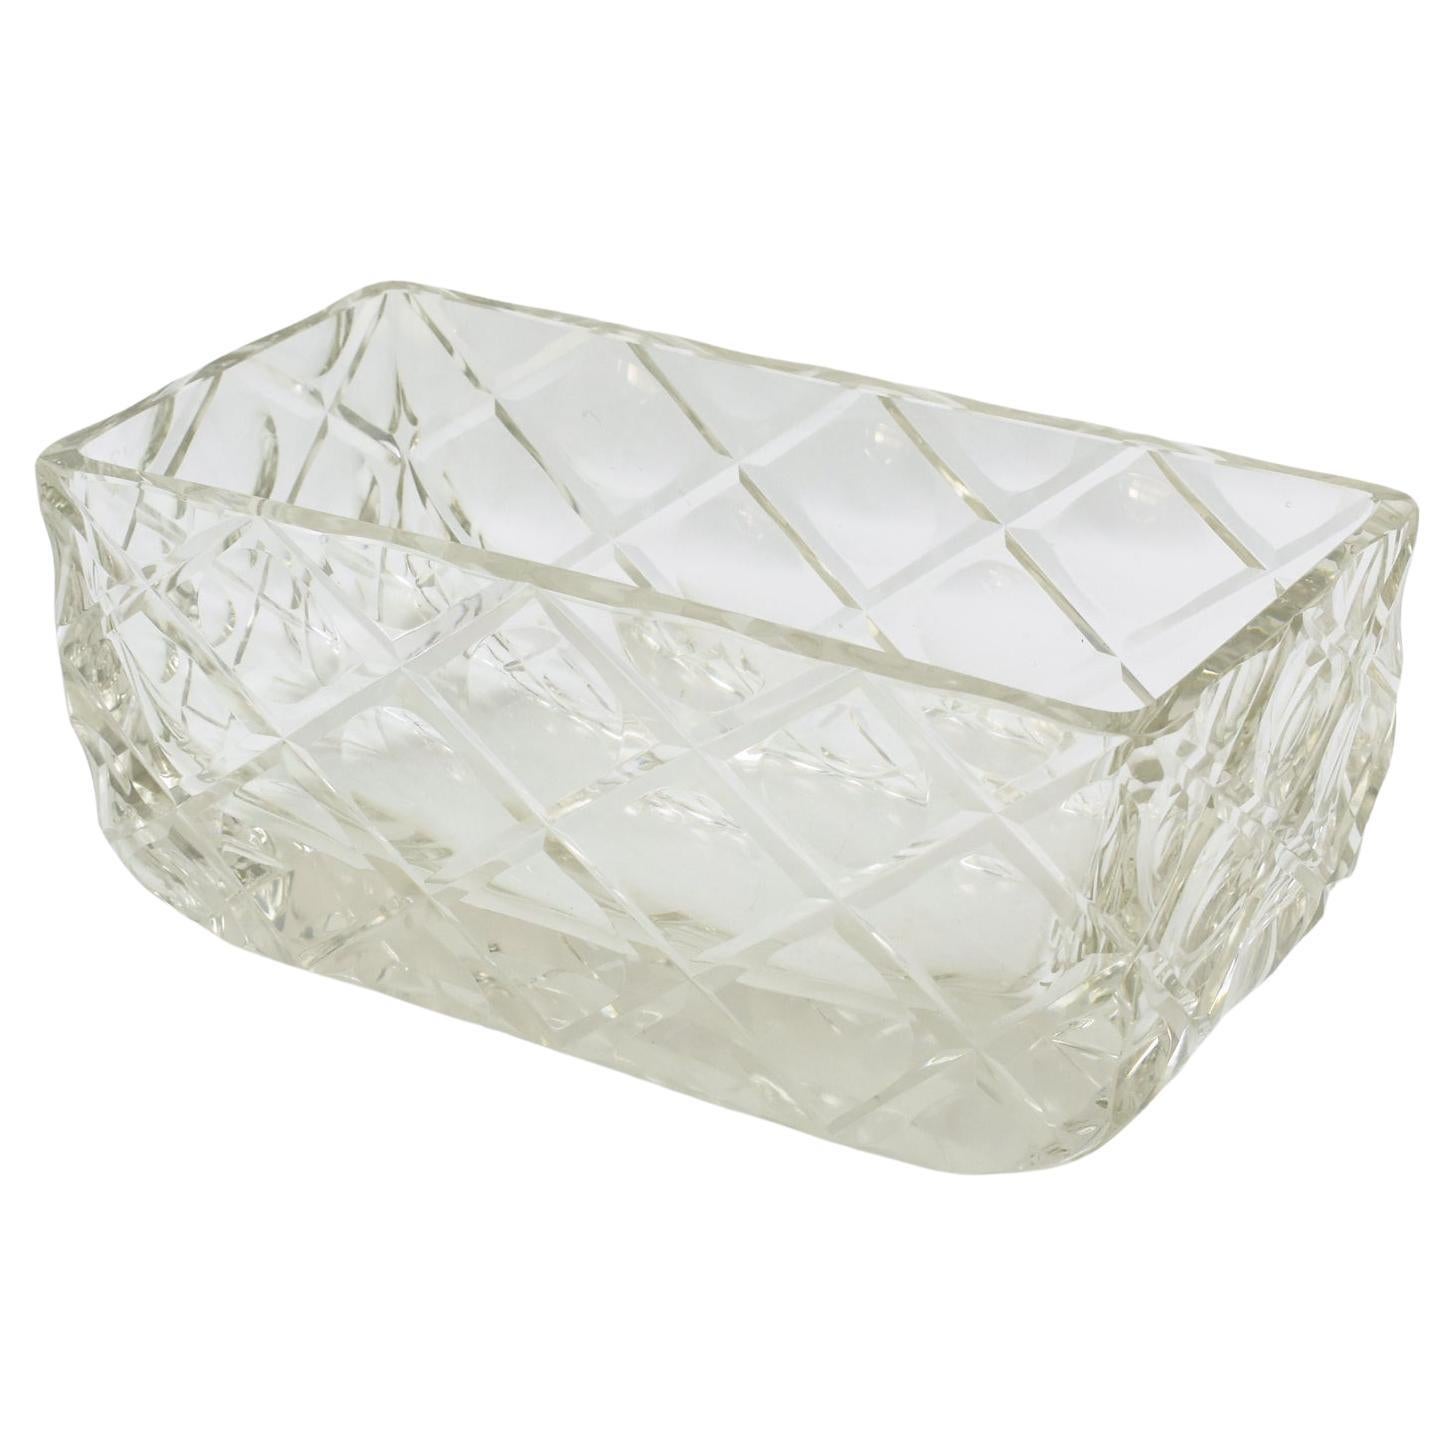 Art Deco Etched Crystal Centerpiece Decorative Bowl, France 1930s For Sale